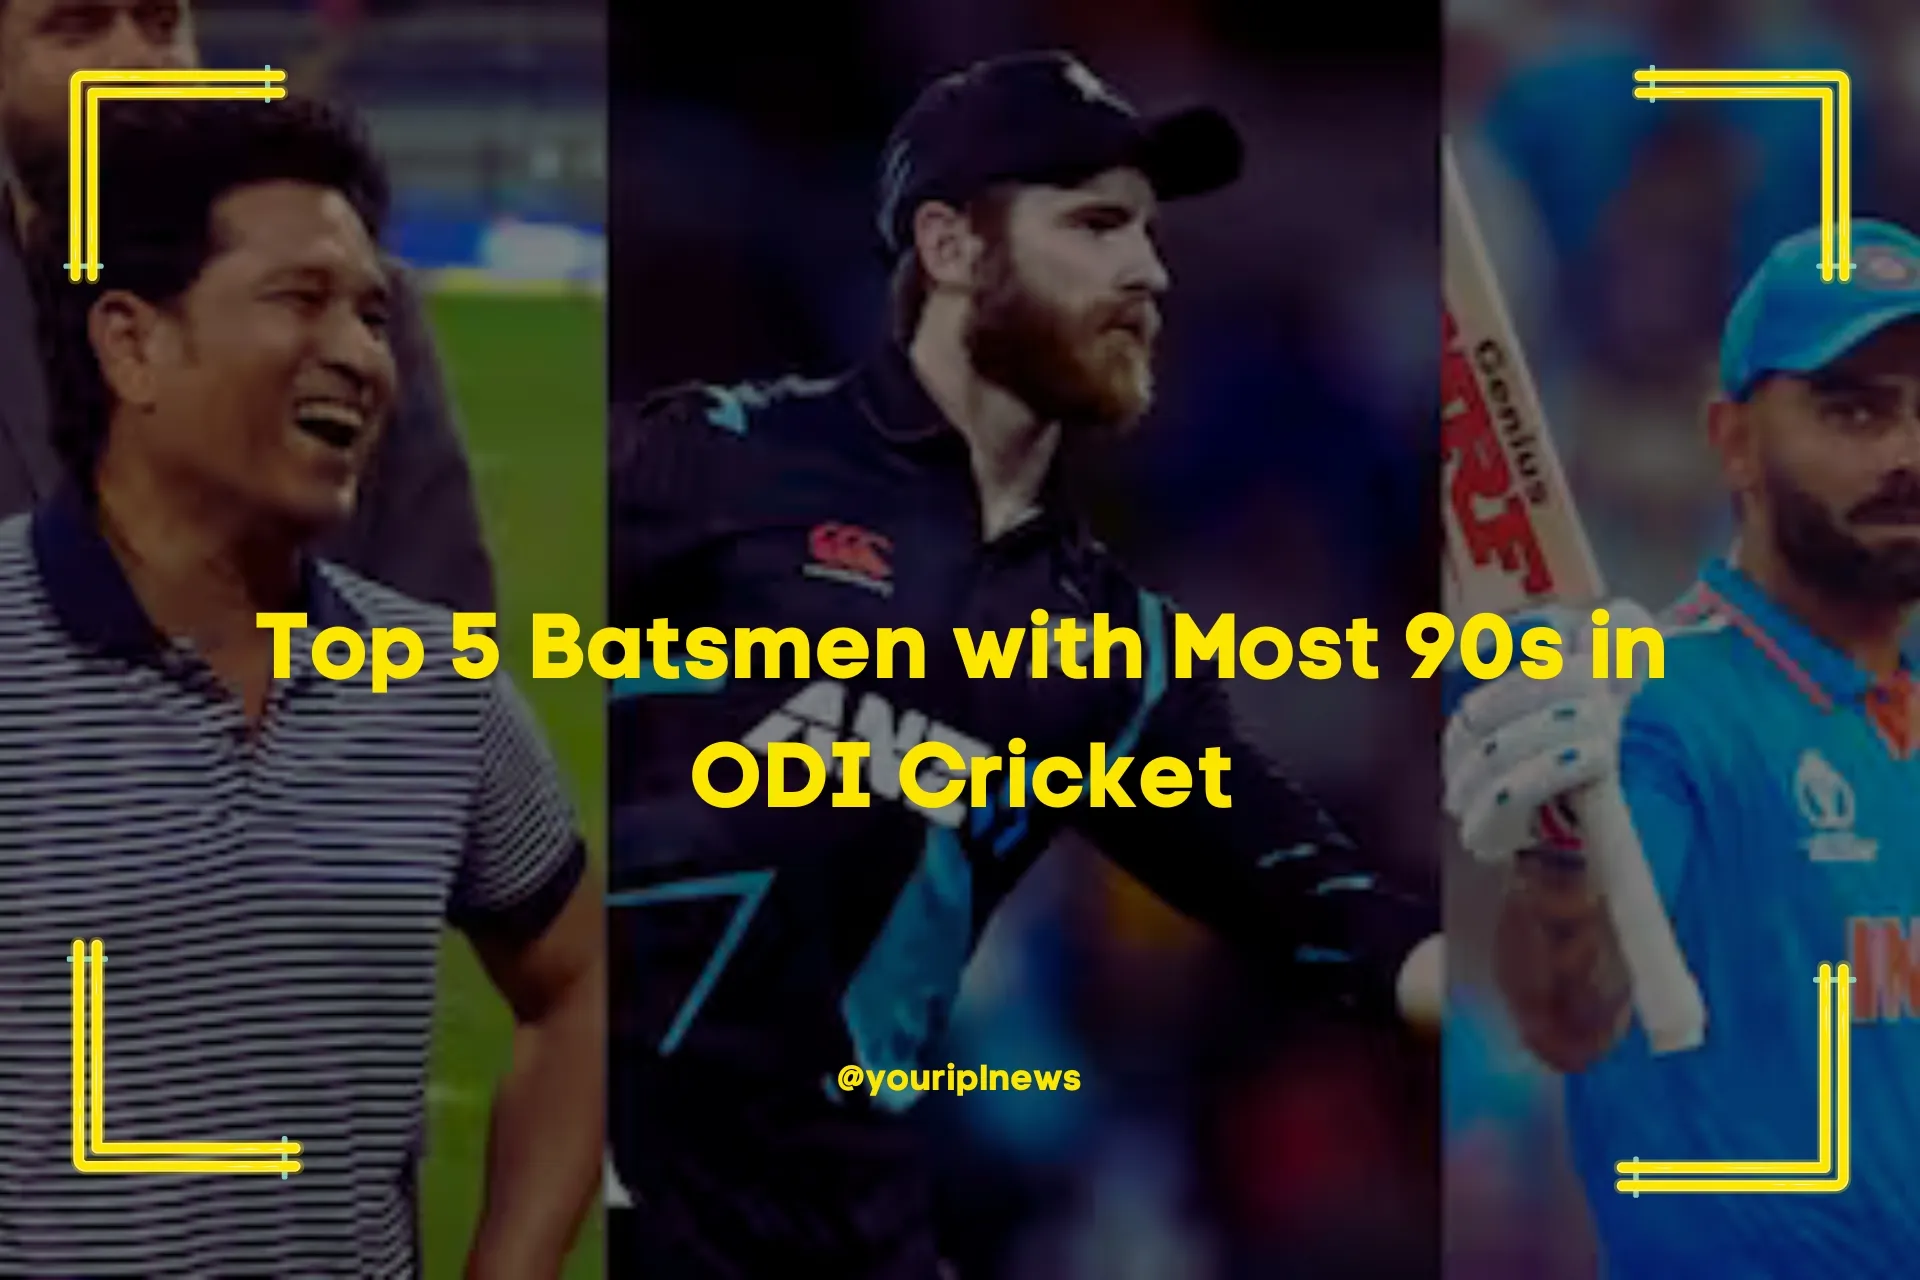 Top 5 Batsmen with Most 90s in ODI Cricket